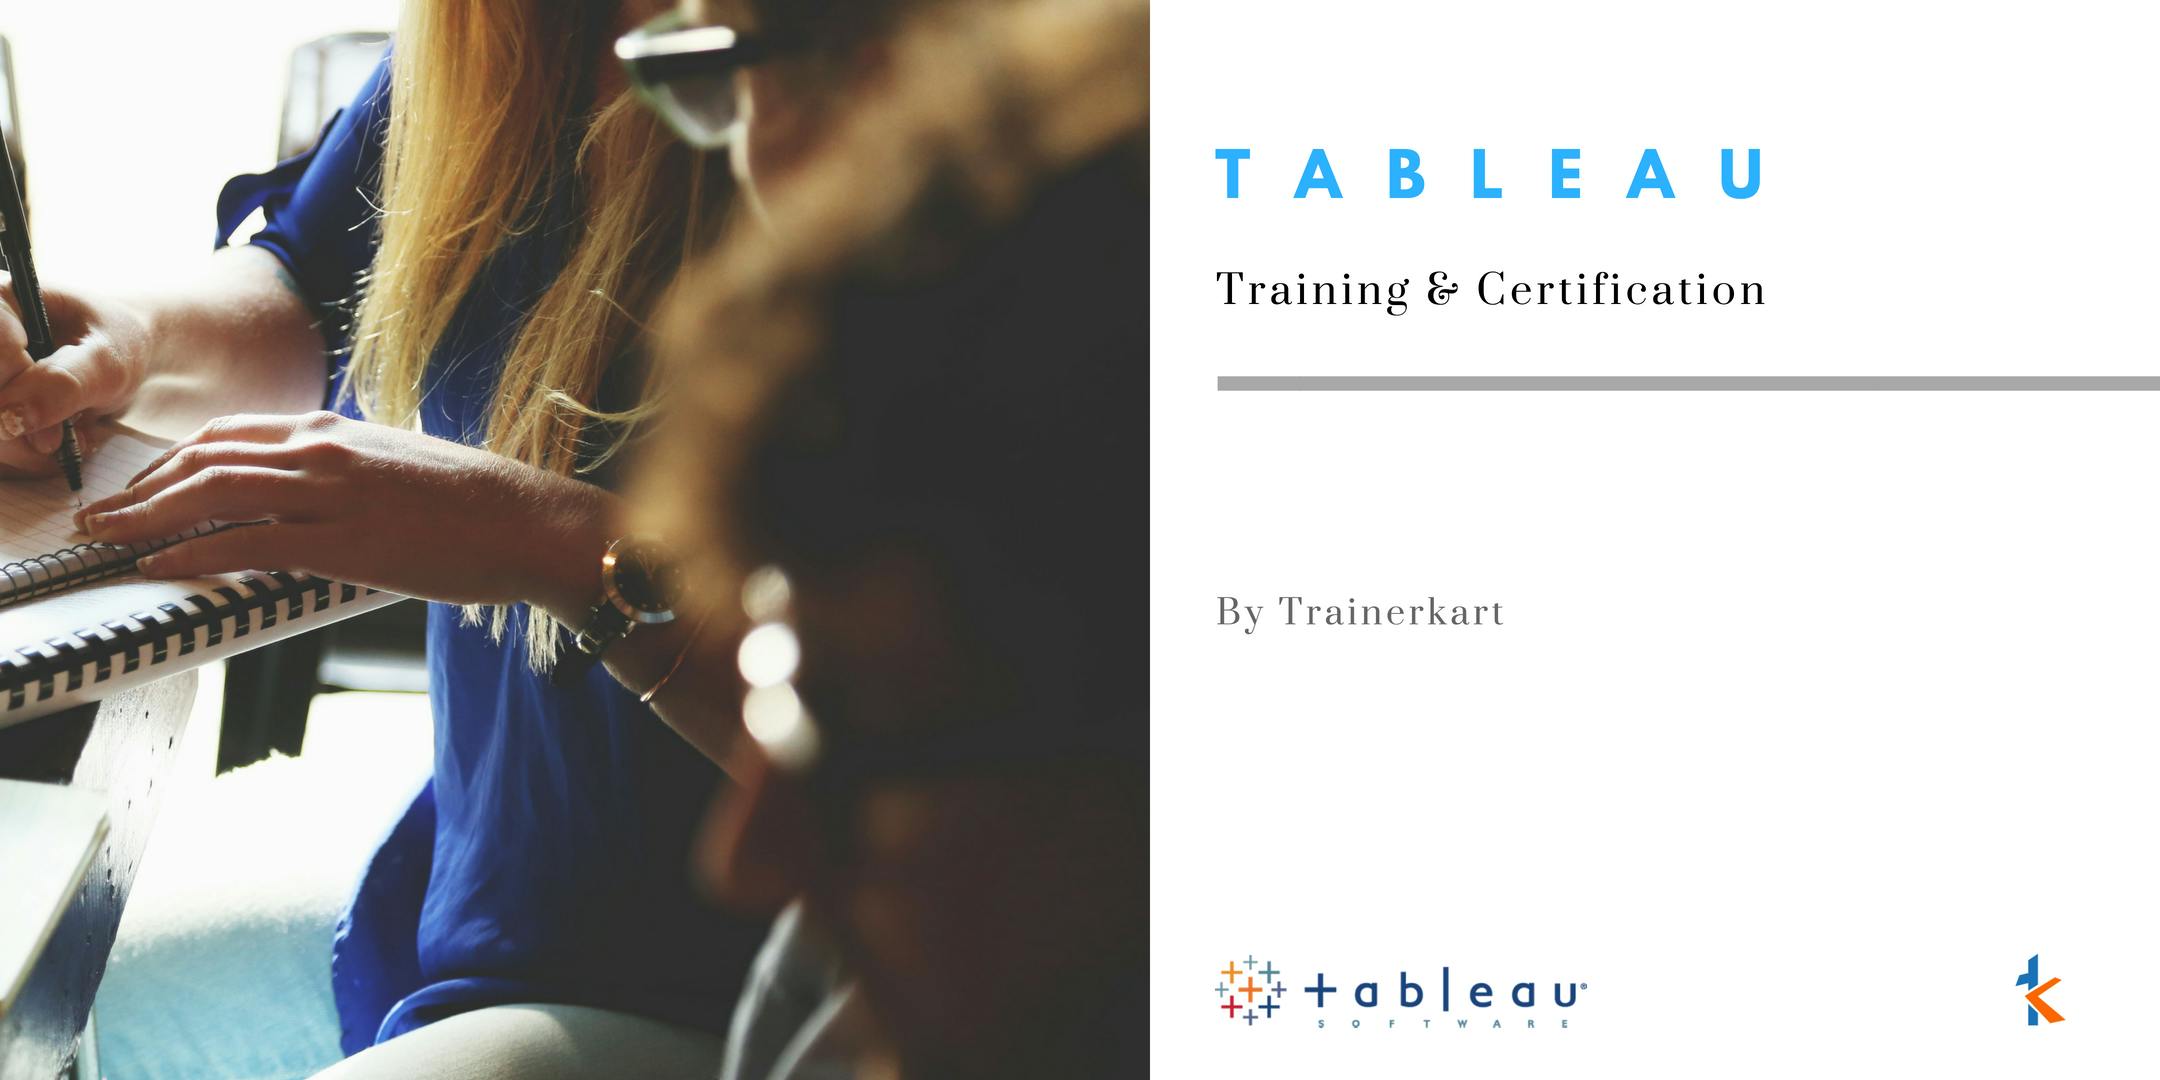 Tableau Training & Certification in Santa Barbara, CA